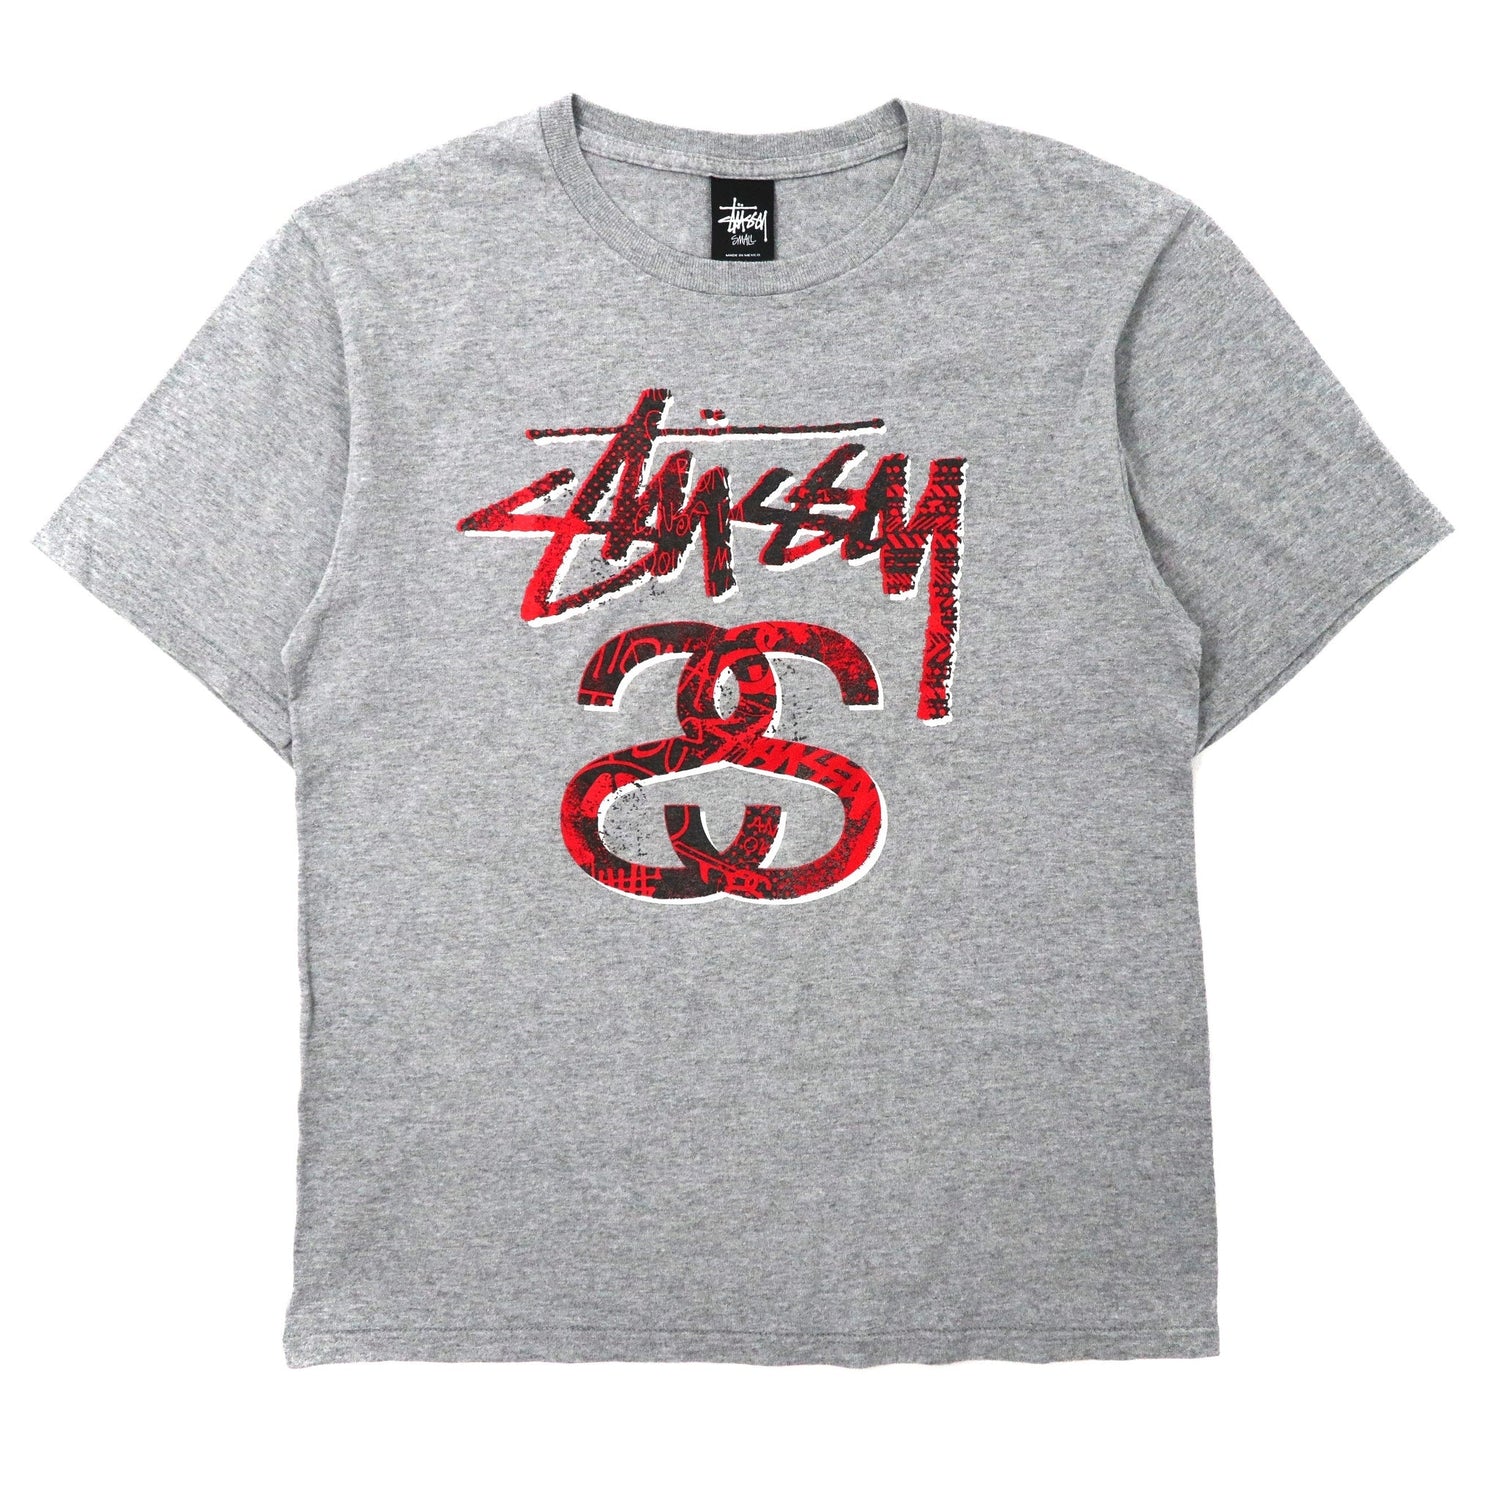 Stussy Logo Print Tee T-Shirt S Gray Cotton Logo Mexico MADE